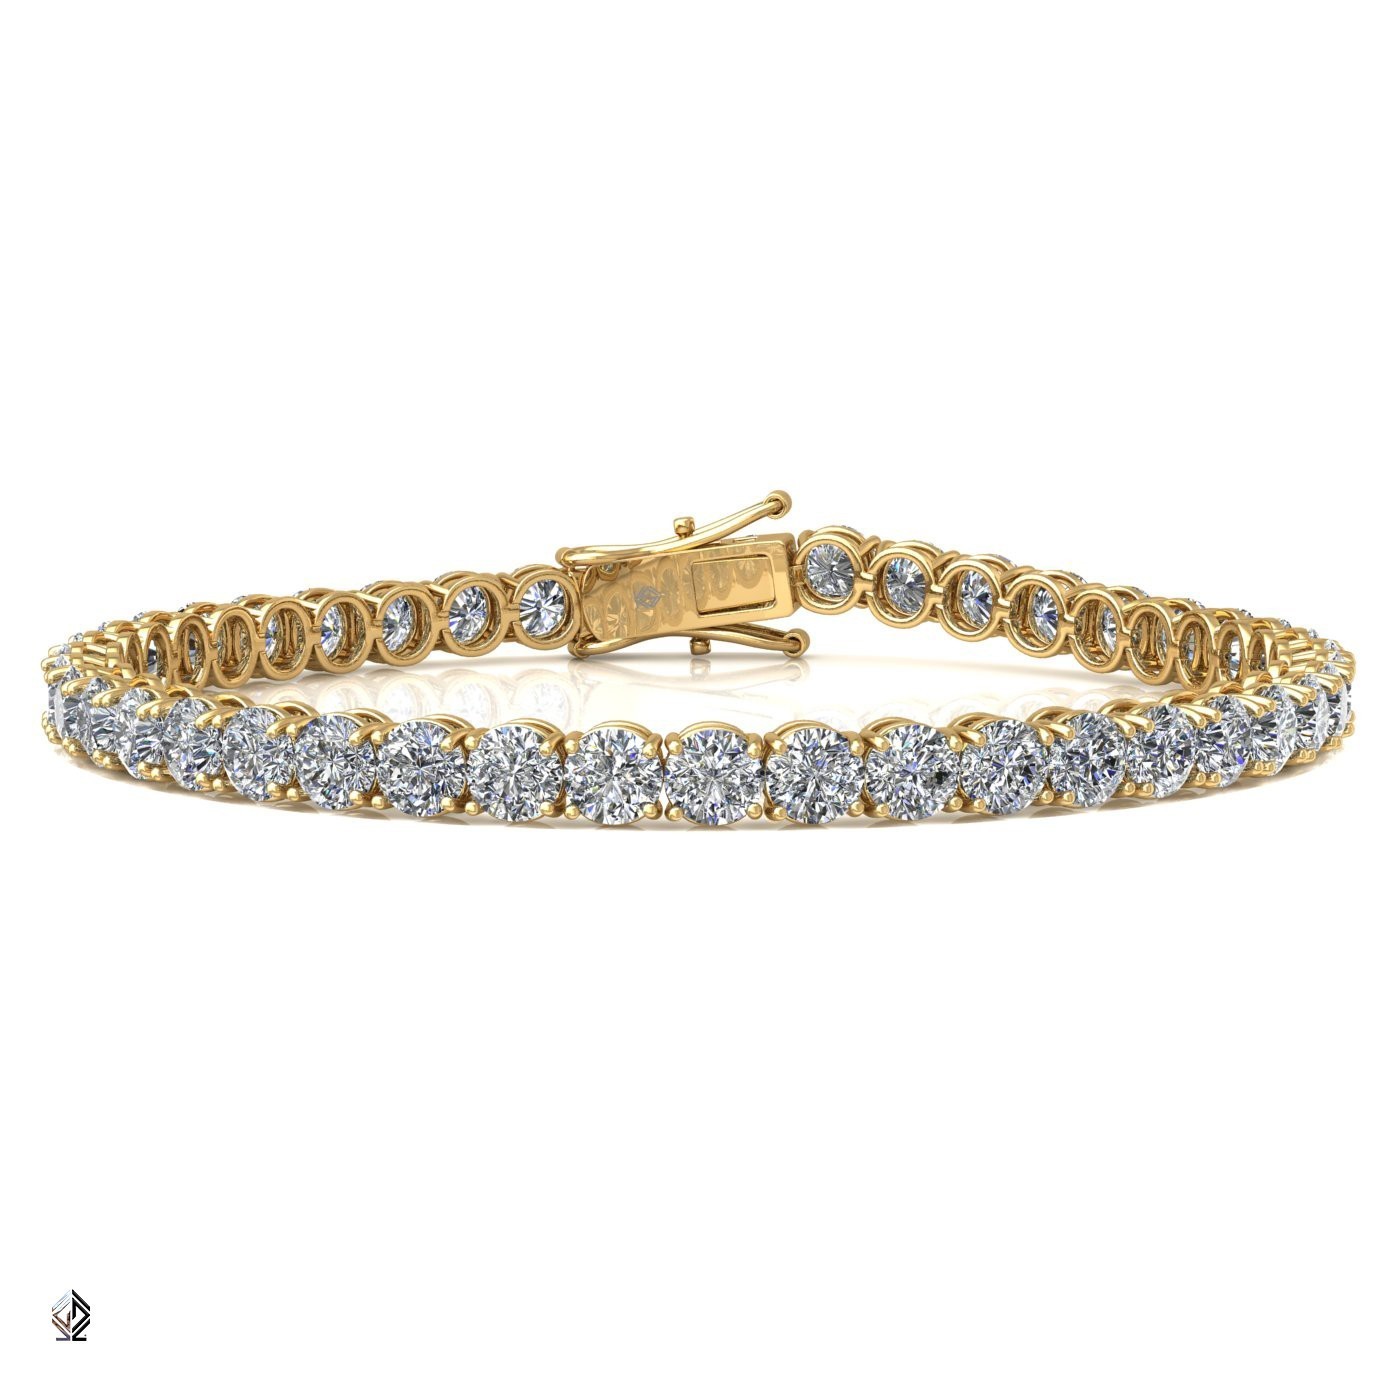 18k yellow gold 4.2mm 4 prong round shape diamond tennis bracelet in round setting